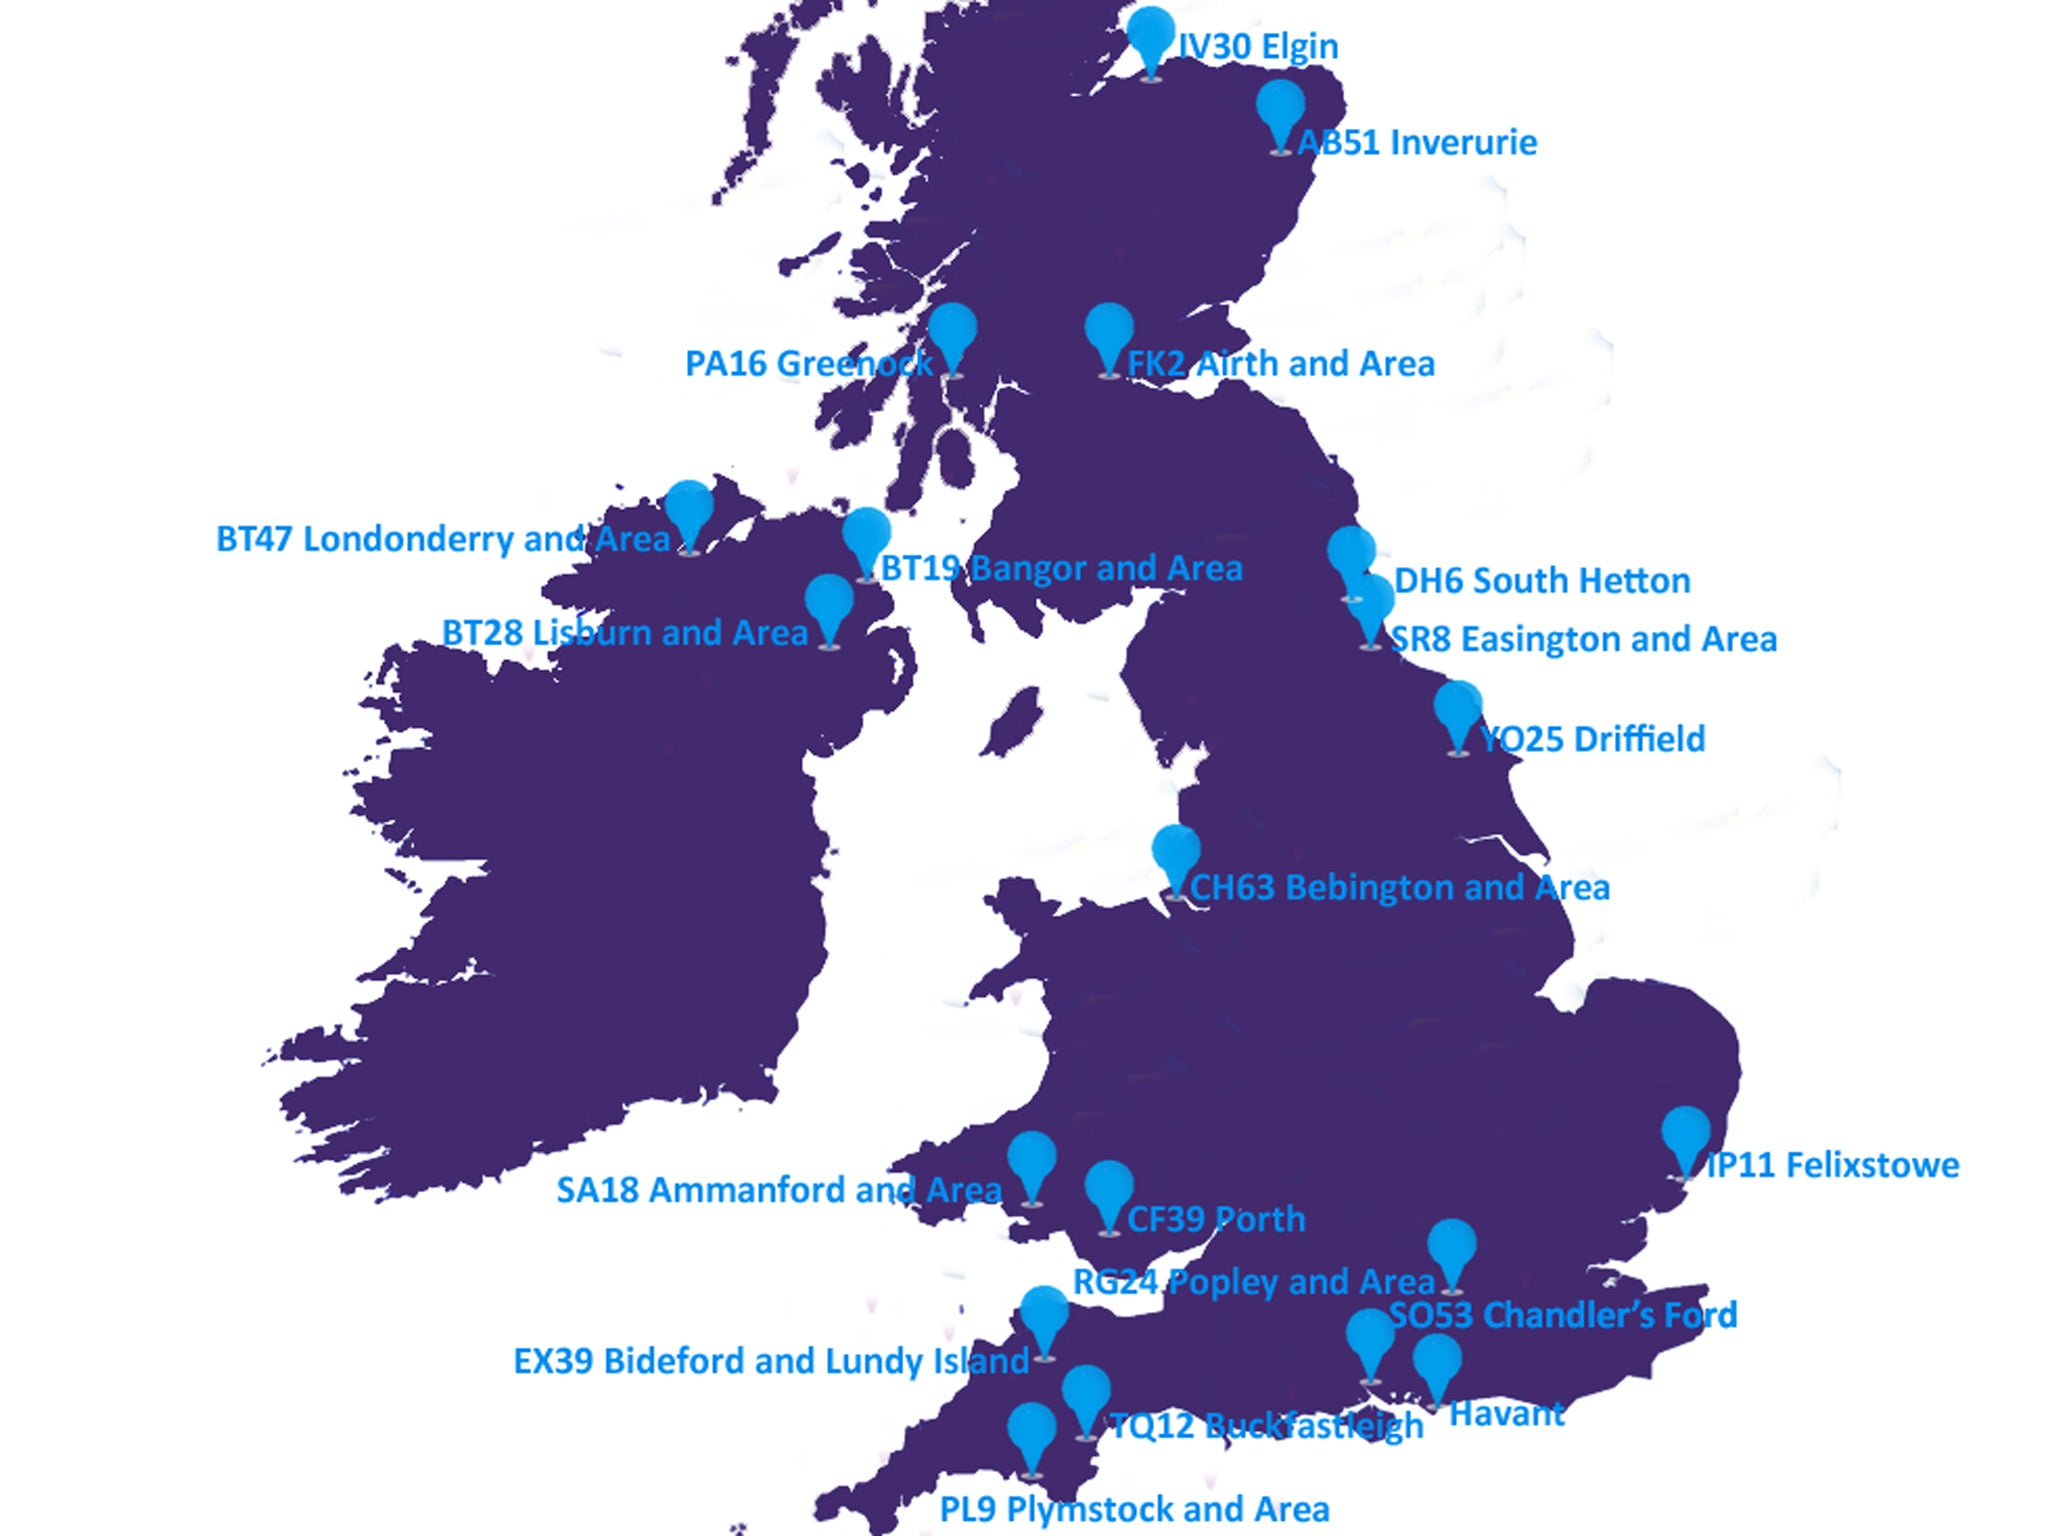 Nine areas of the UK recorded no burglary claims according to analysis by MoneySupermarket